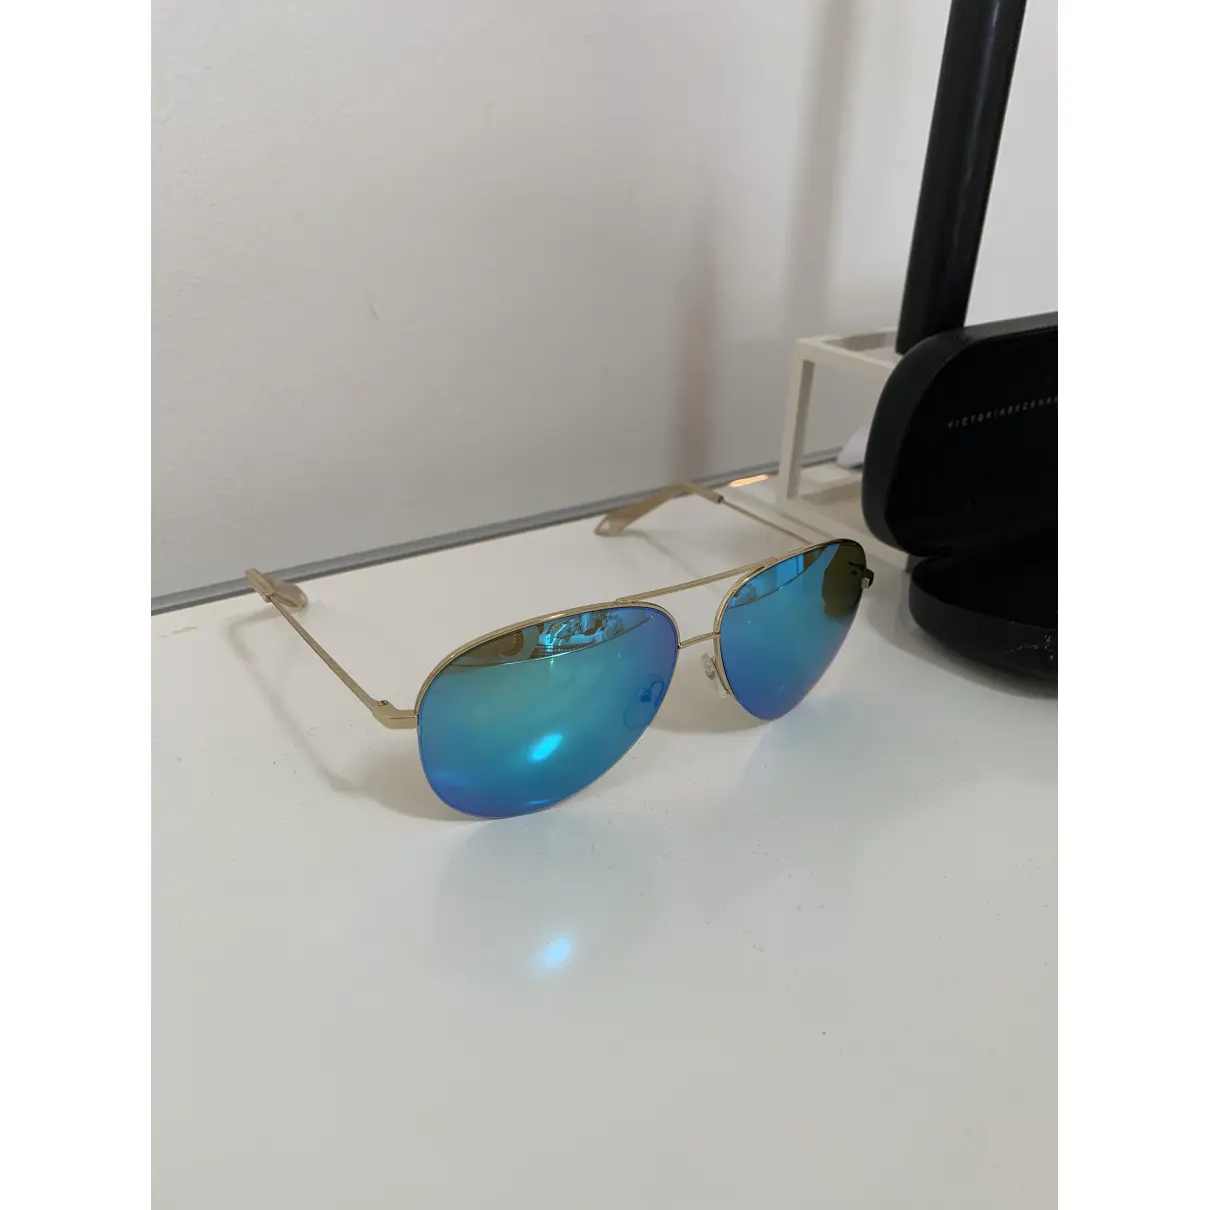 Buy Victoria Beckham Aviator sunglasses online